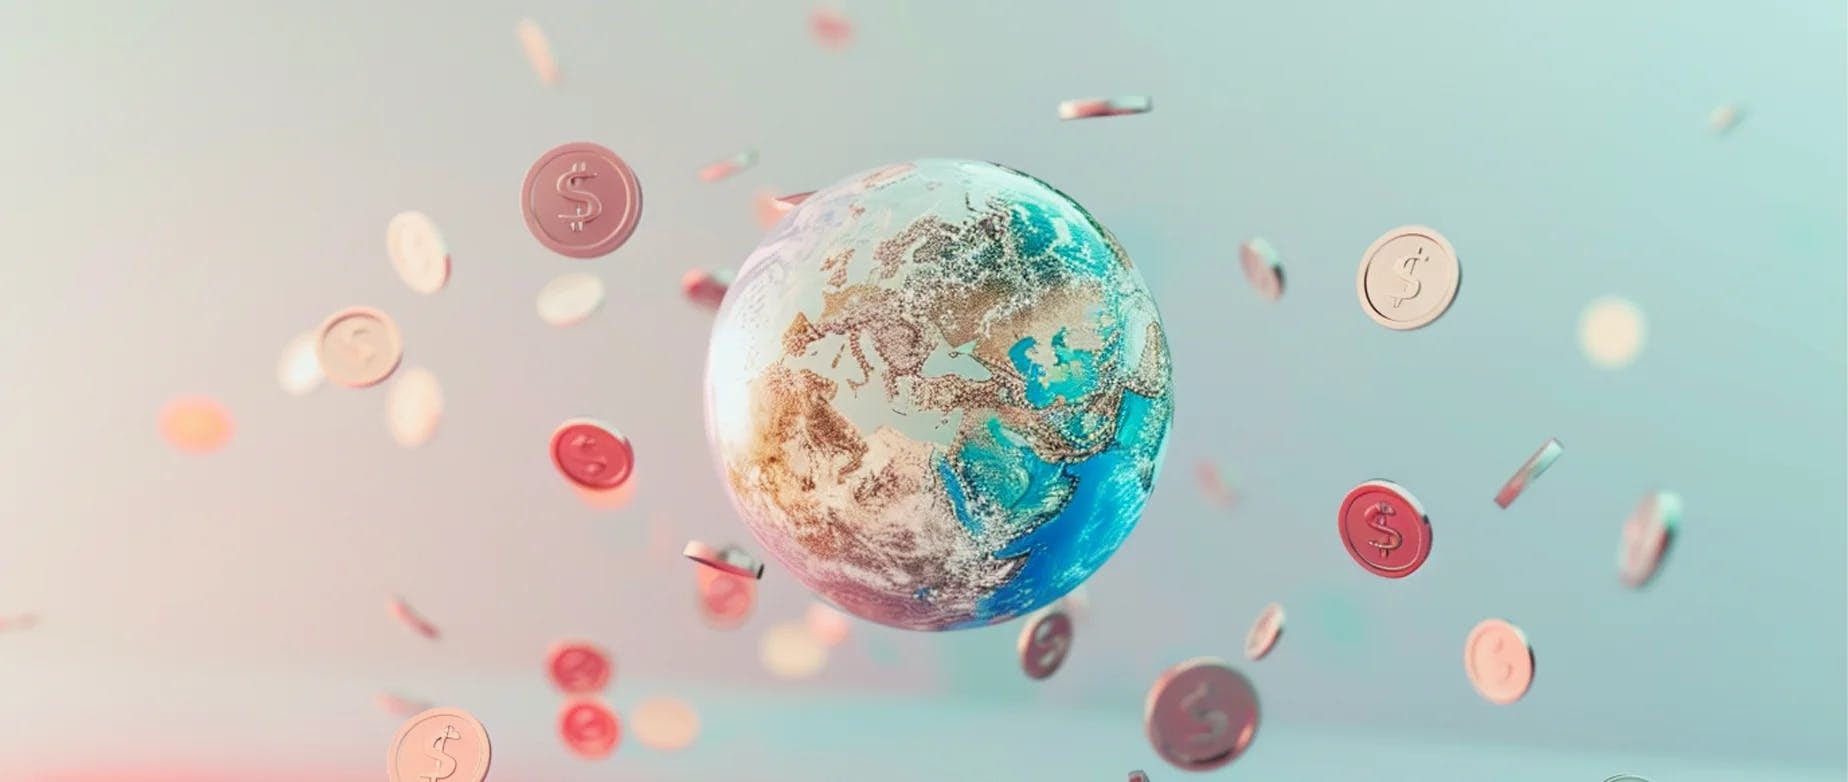 Globe with coins around it representing money transfers around the world